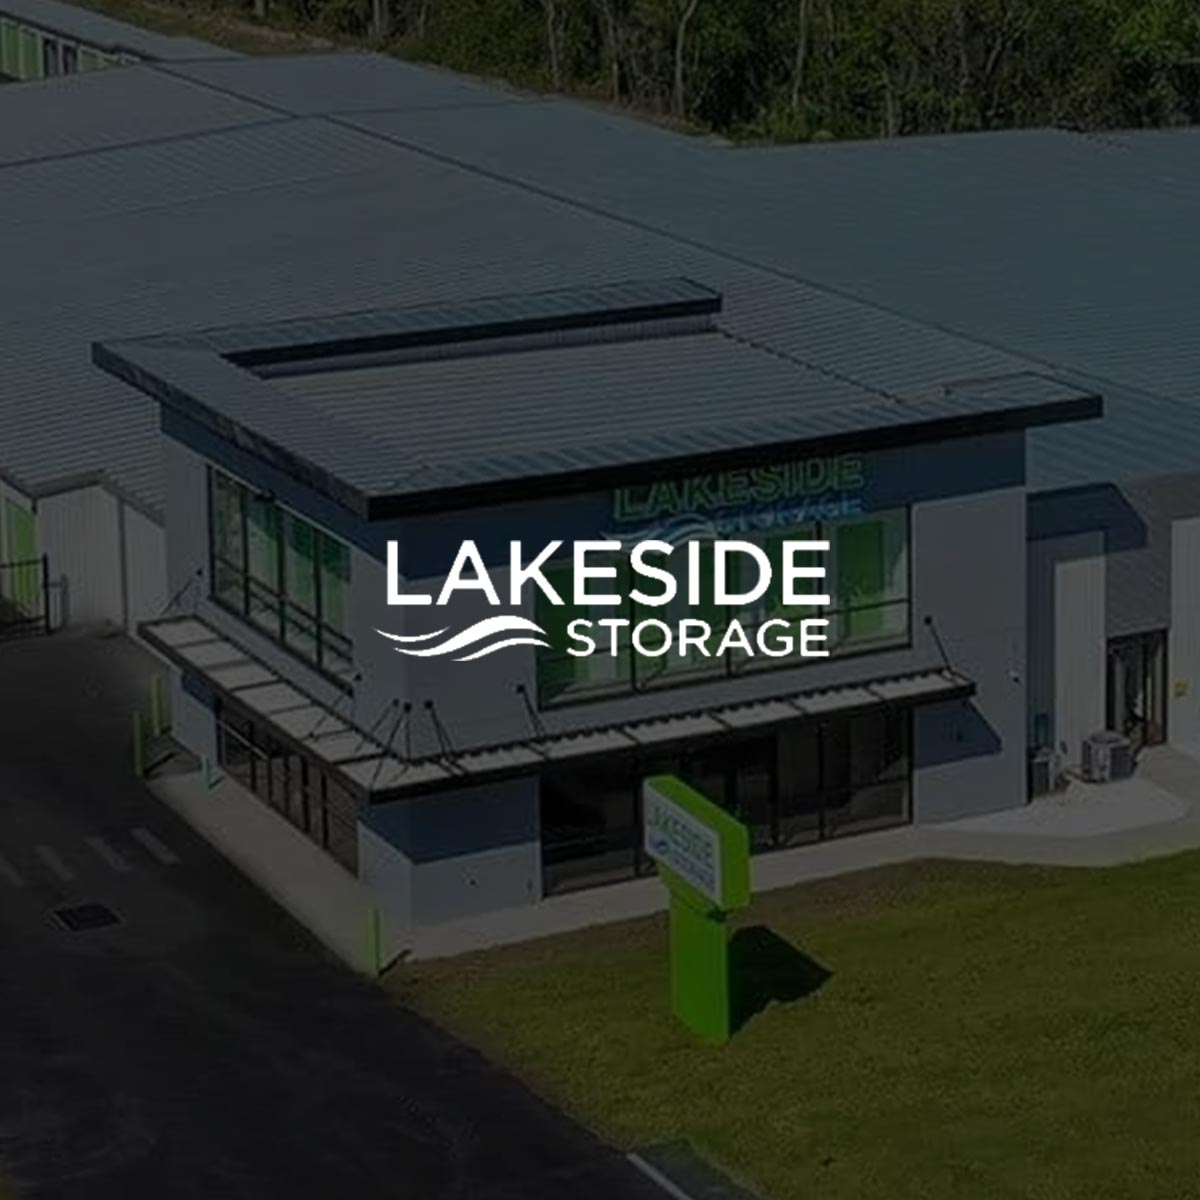 Lakeside Storage | Storage facility web design